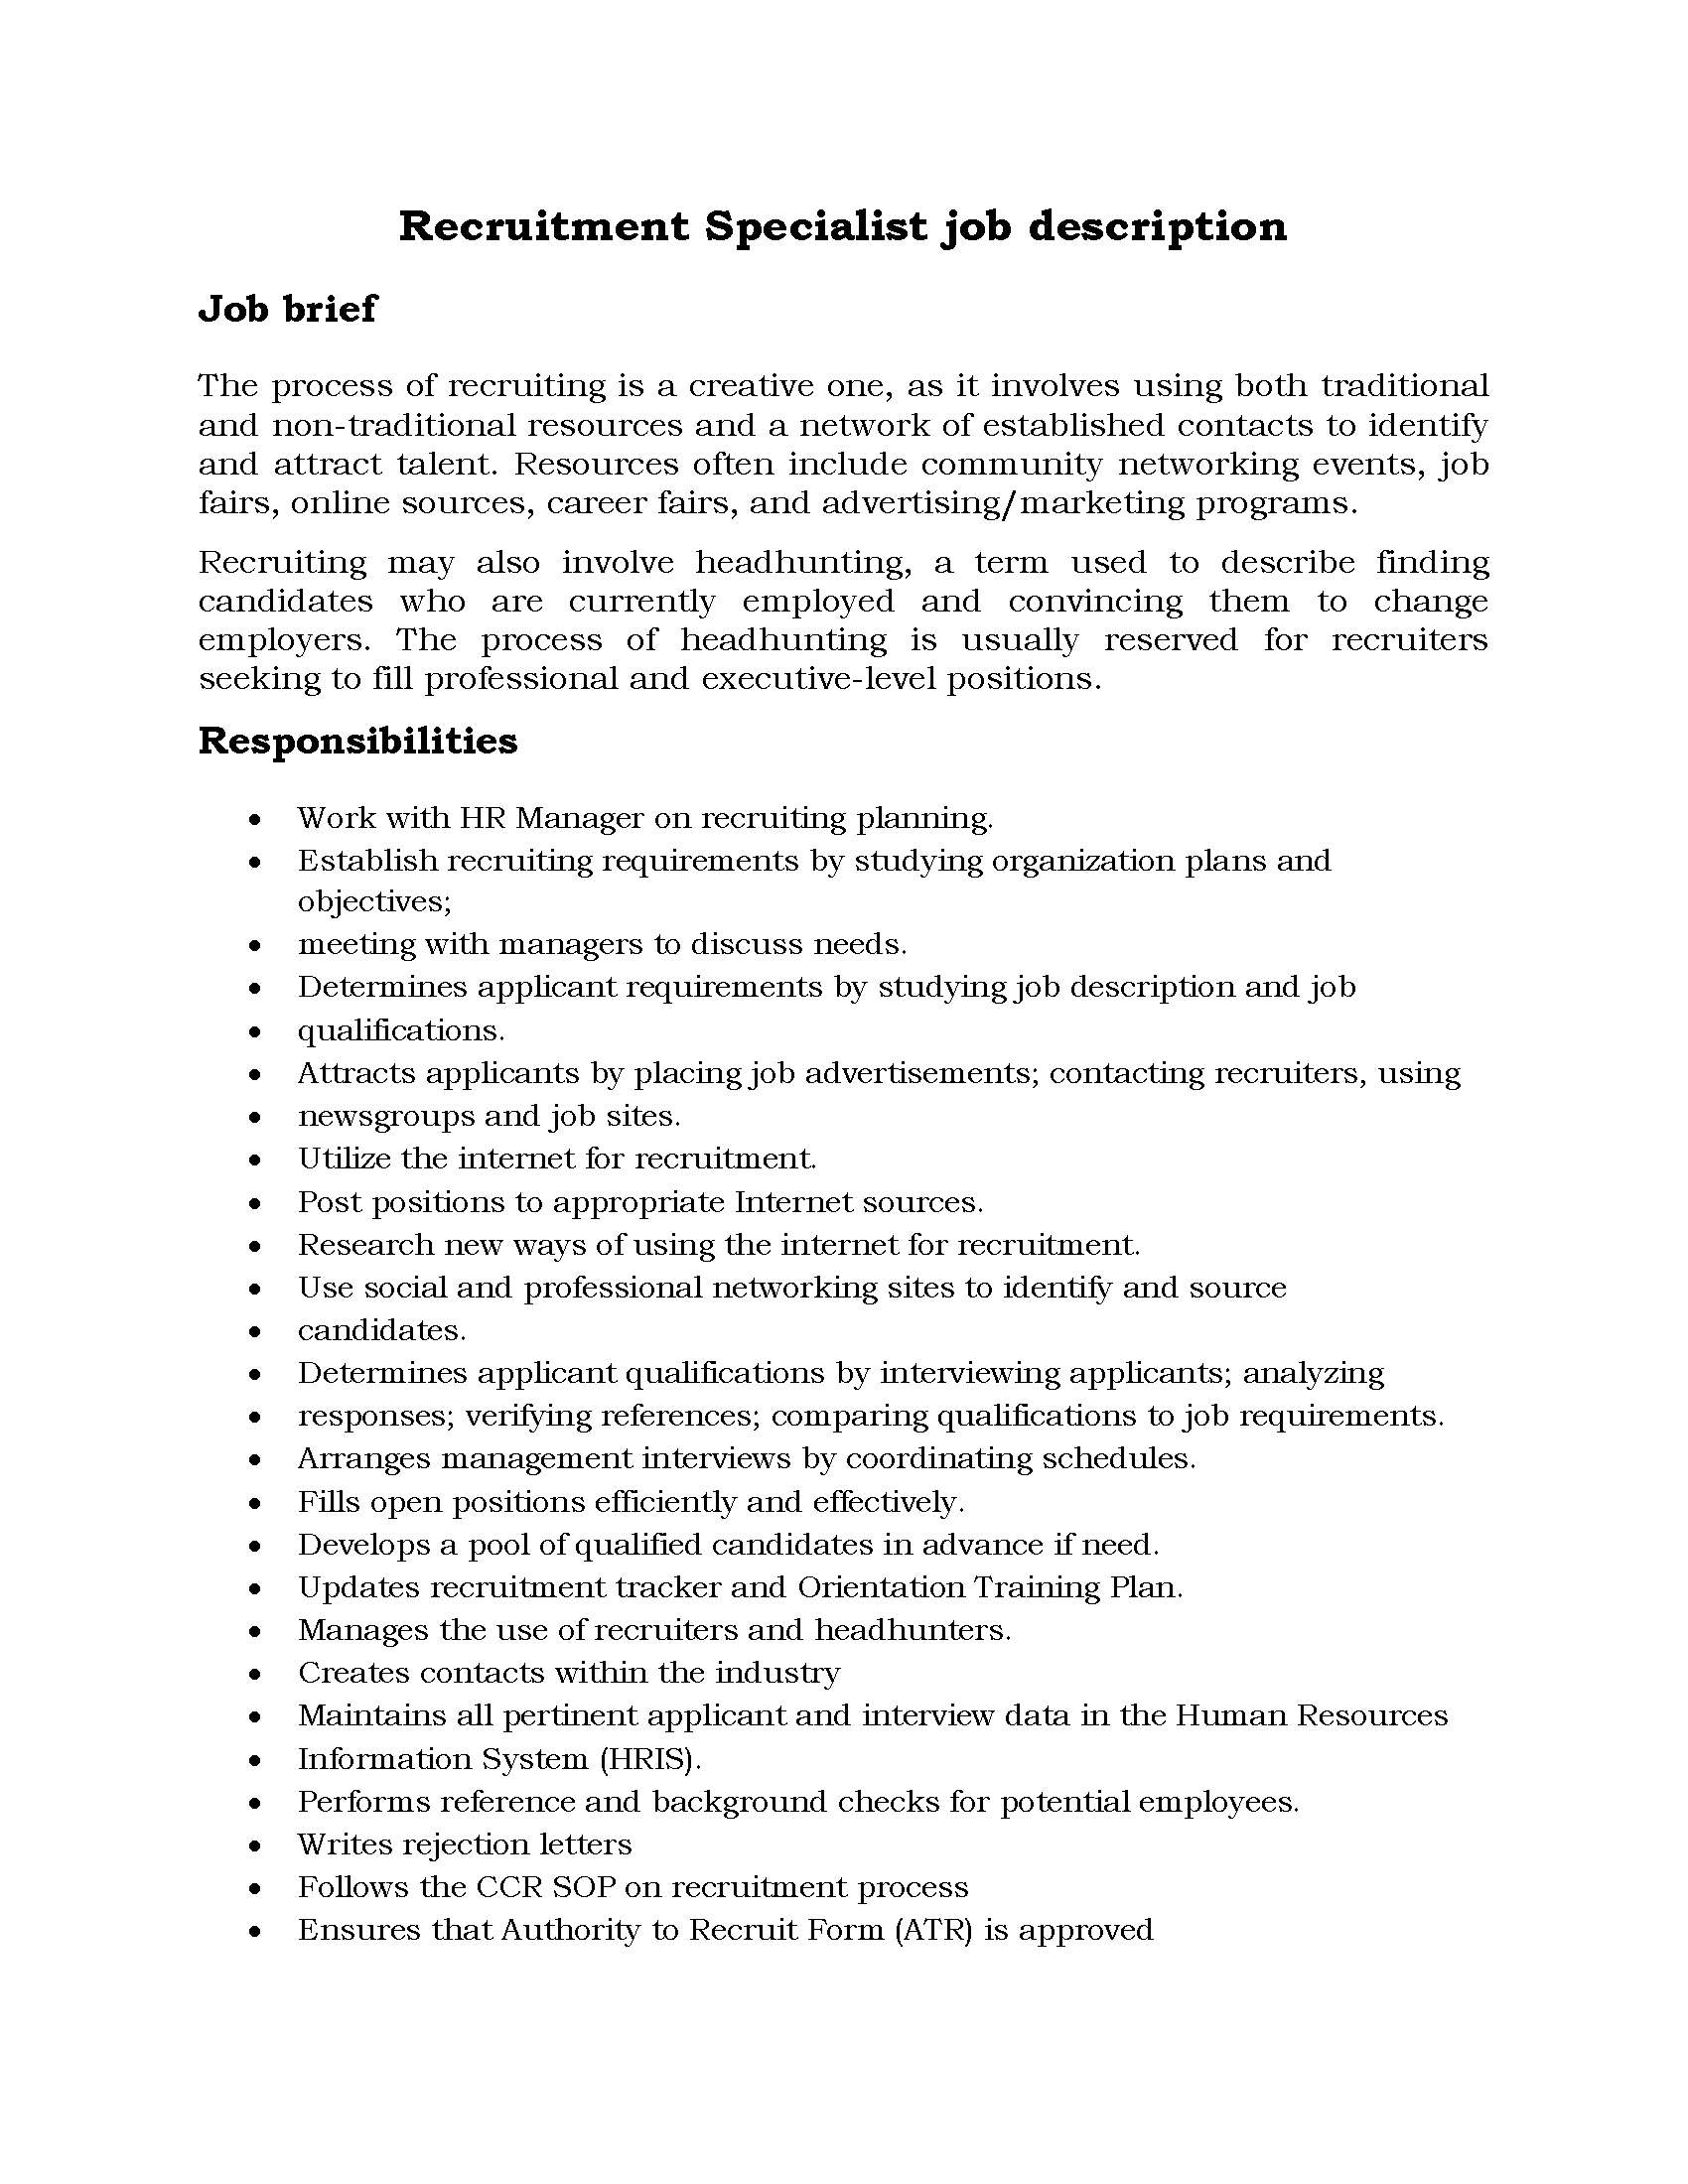 104-Recruitment Specialist job description